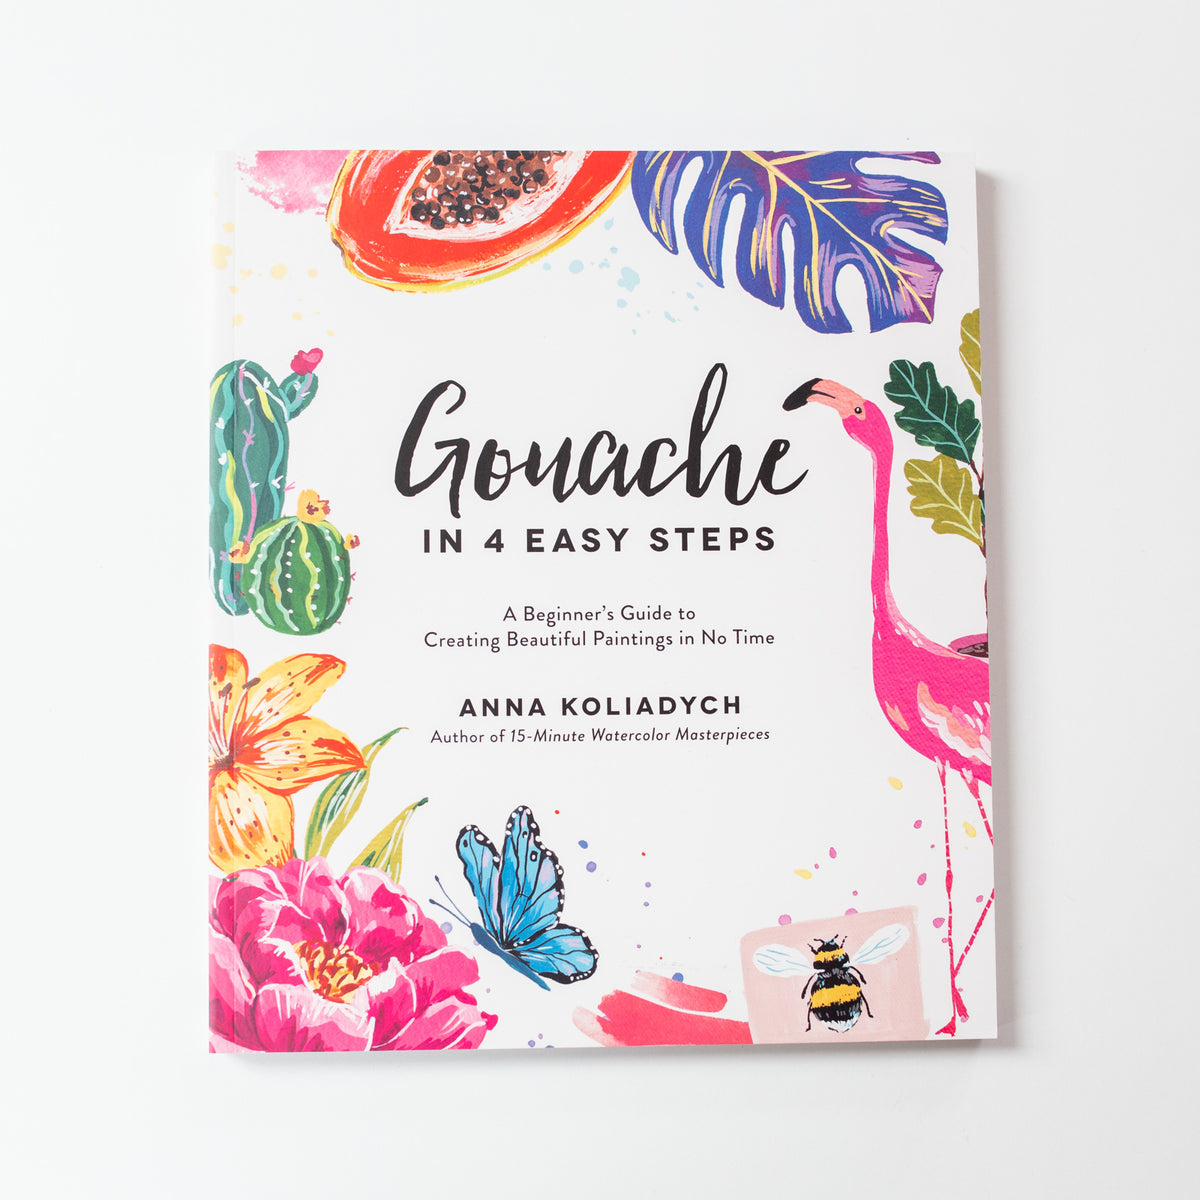 Gouache in 4 easy steps by Anna Koliadych